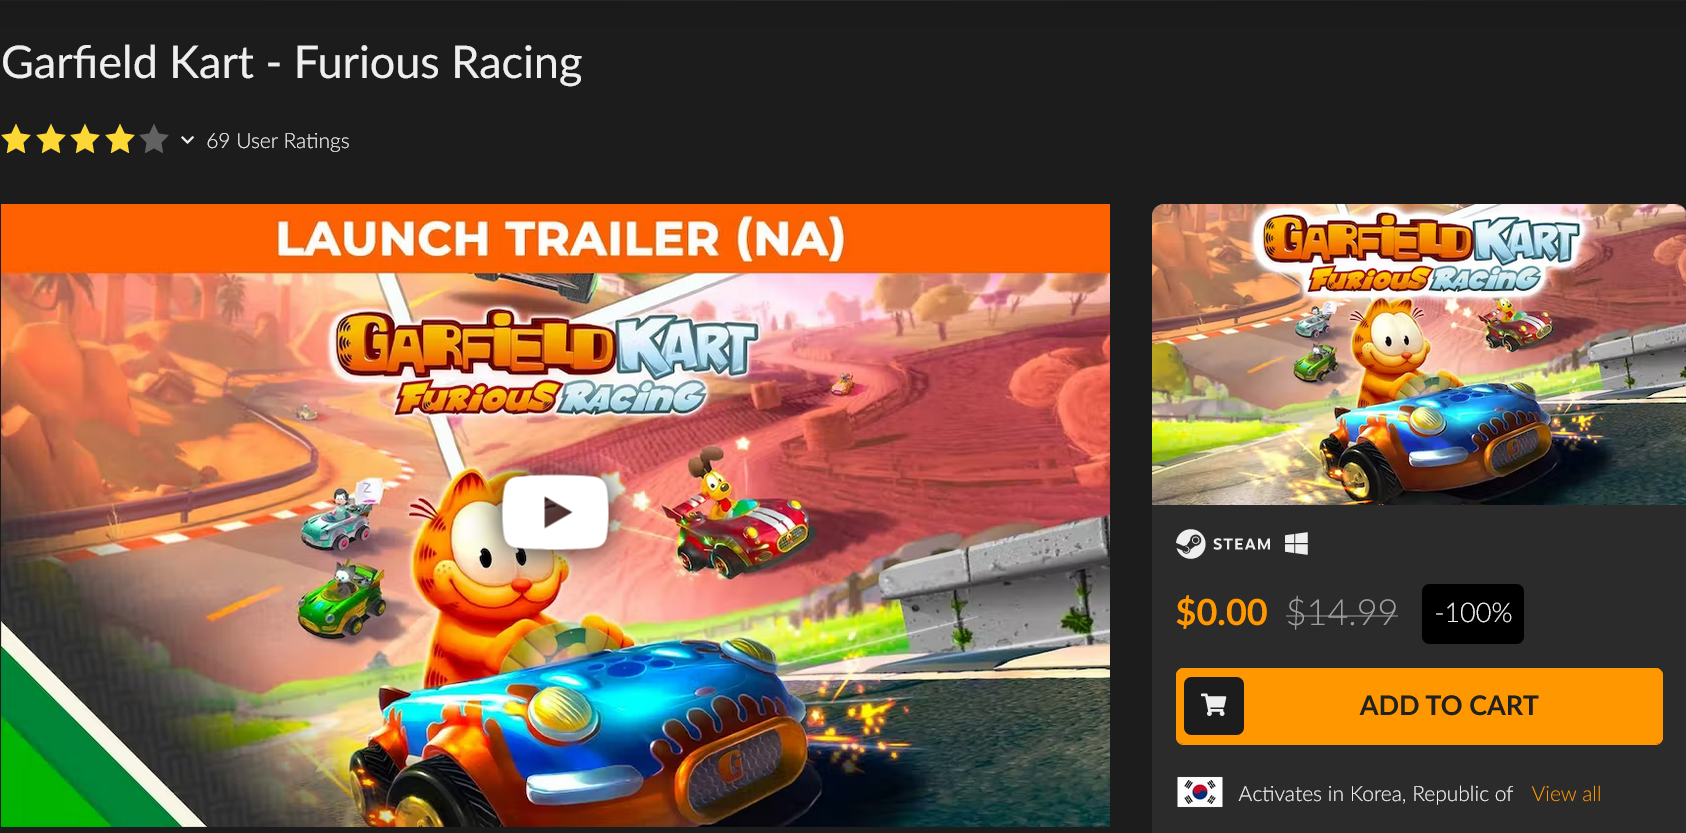 Screenshot 2022-11-25 at 01-16-55 Garfield Kart - Furious Racing Steam PC Game.png